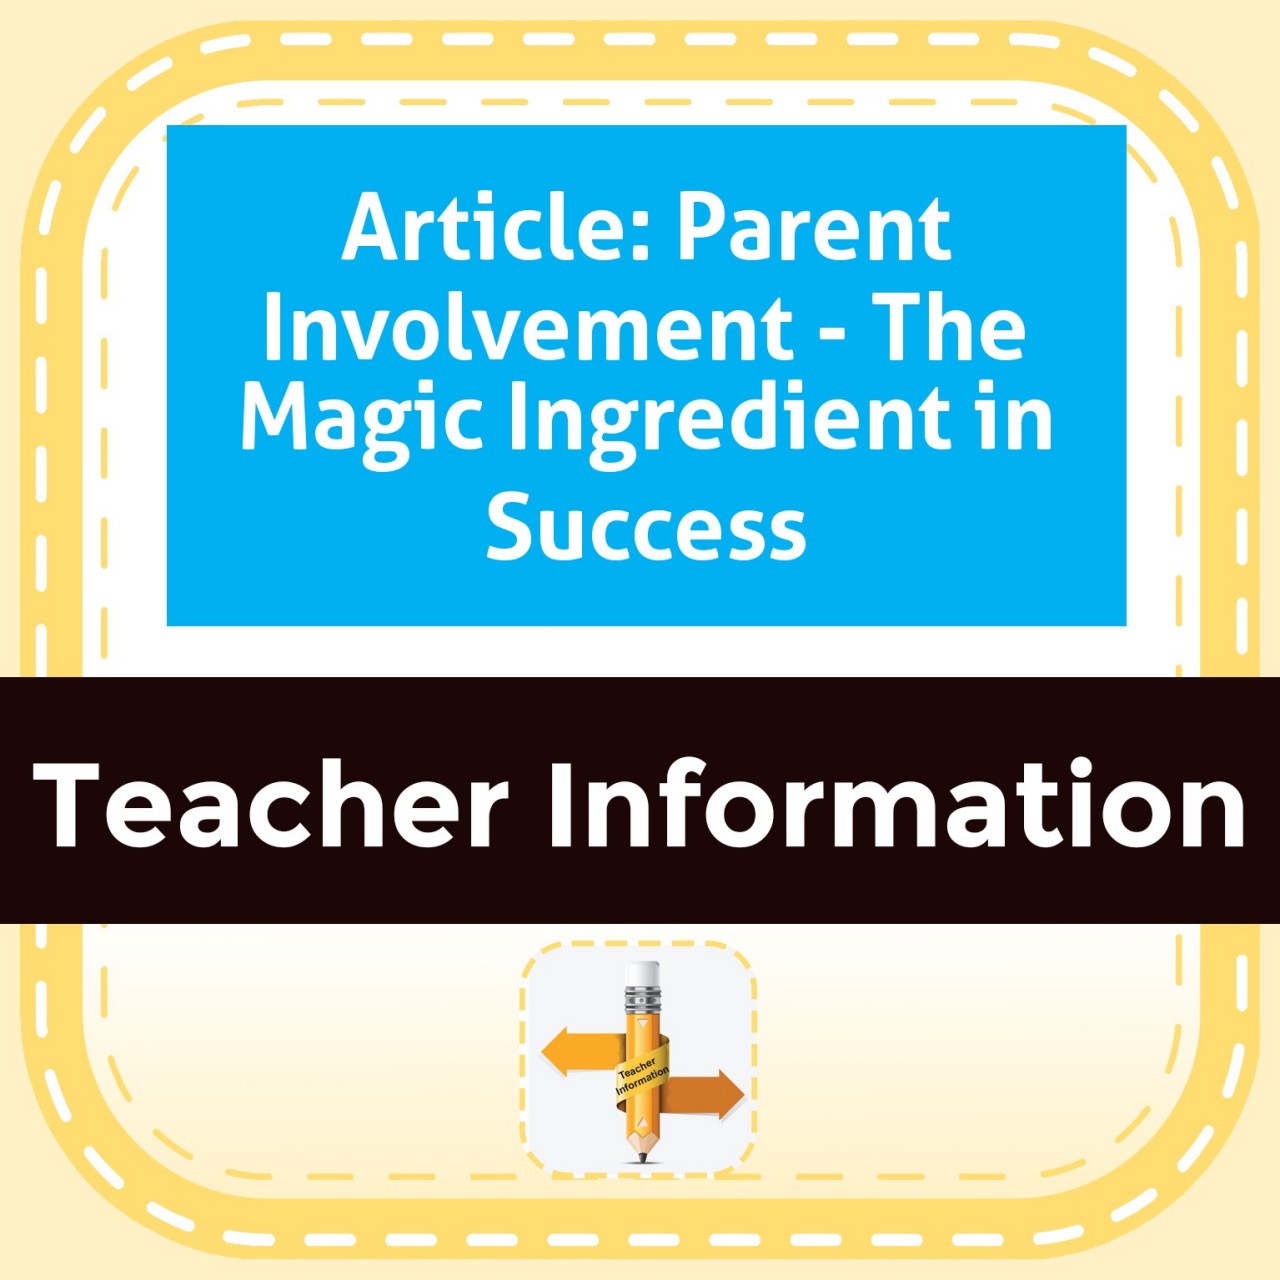 Article: Parent Involvement - The Magic Ingredient in Success